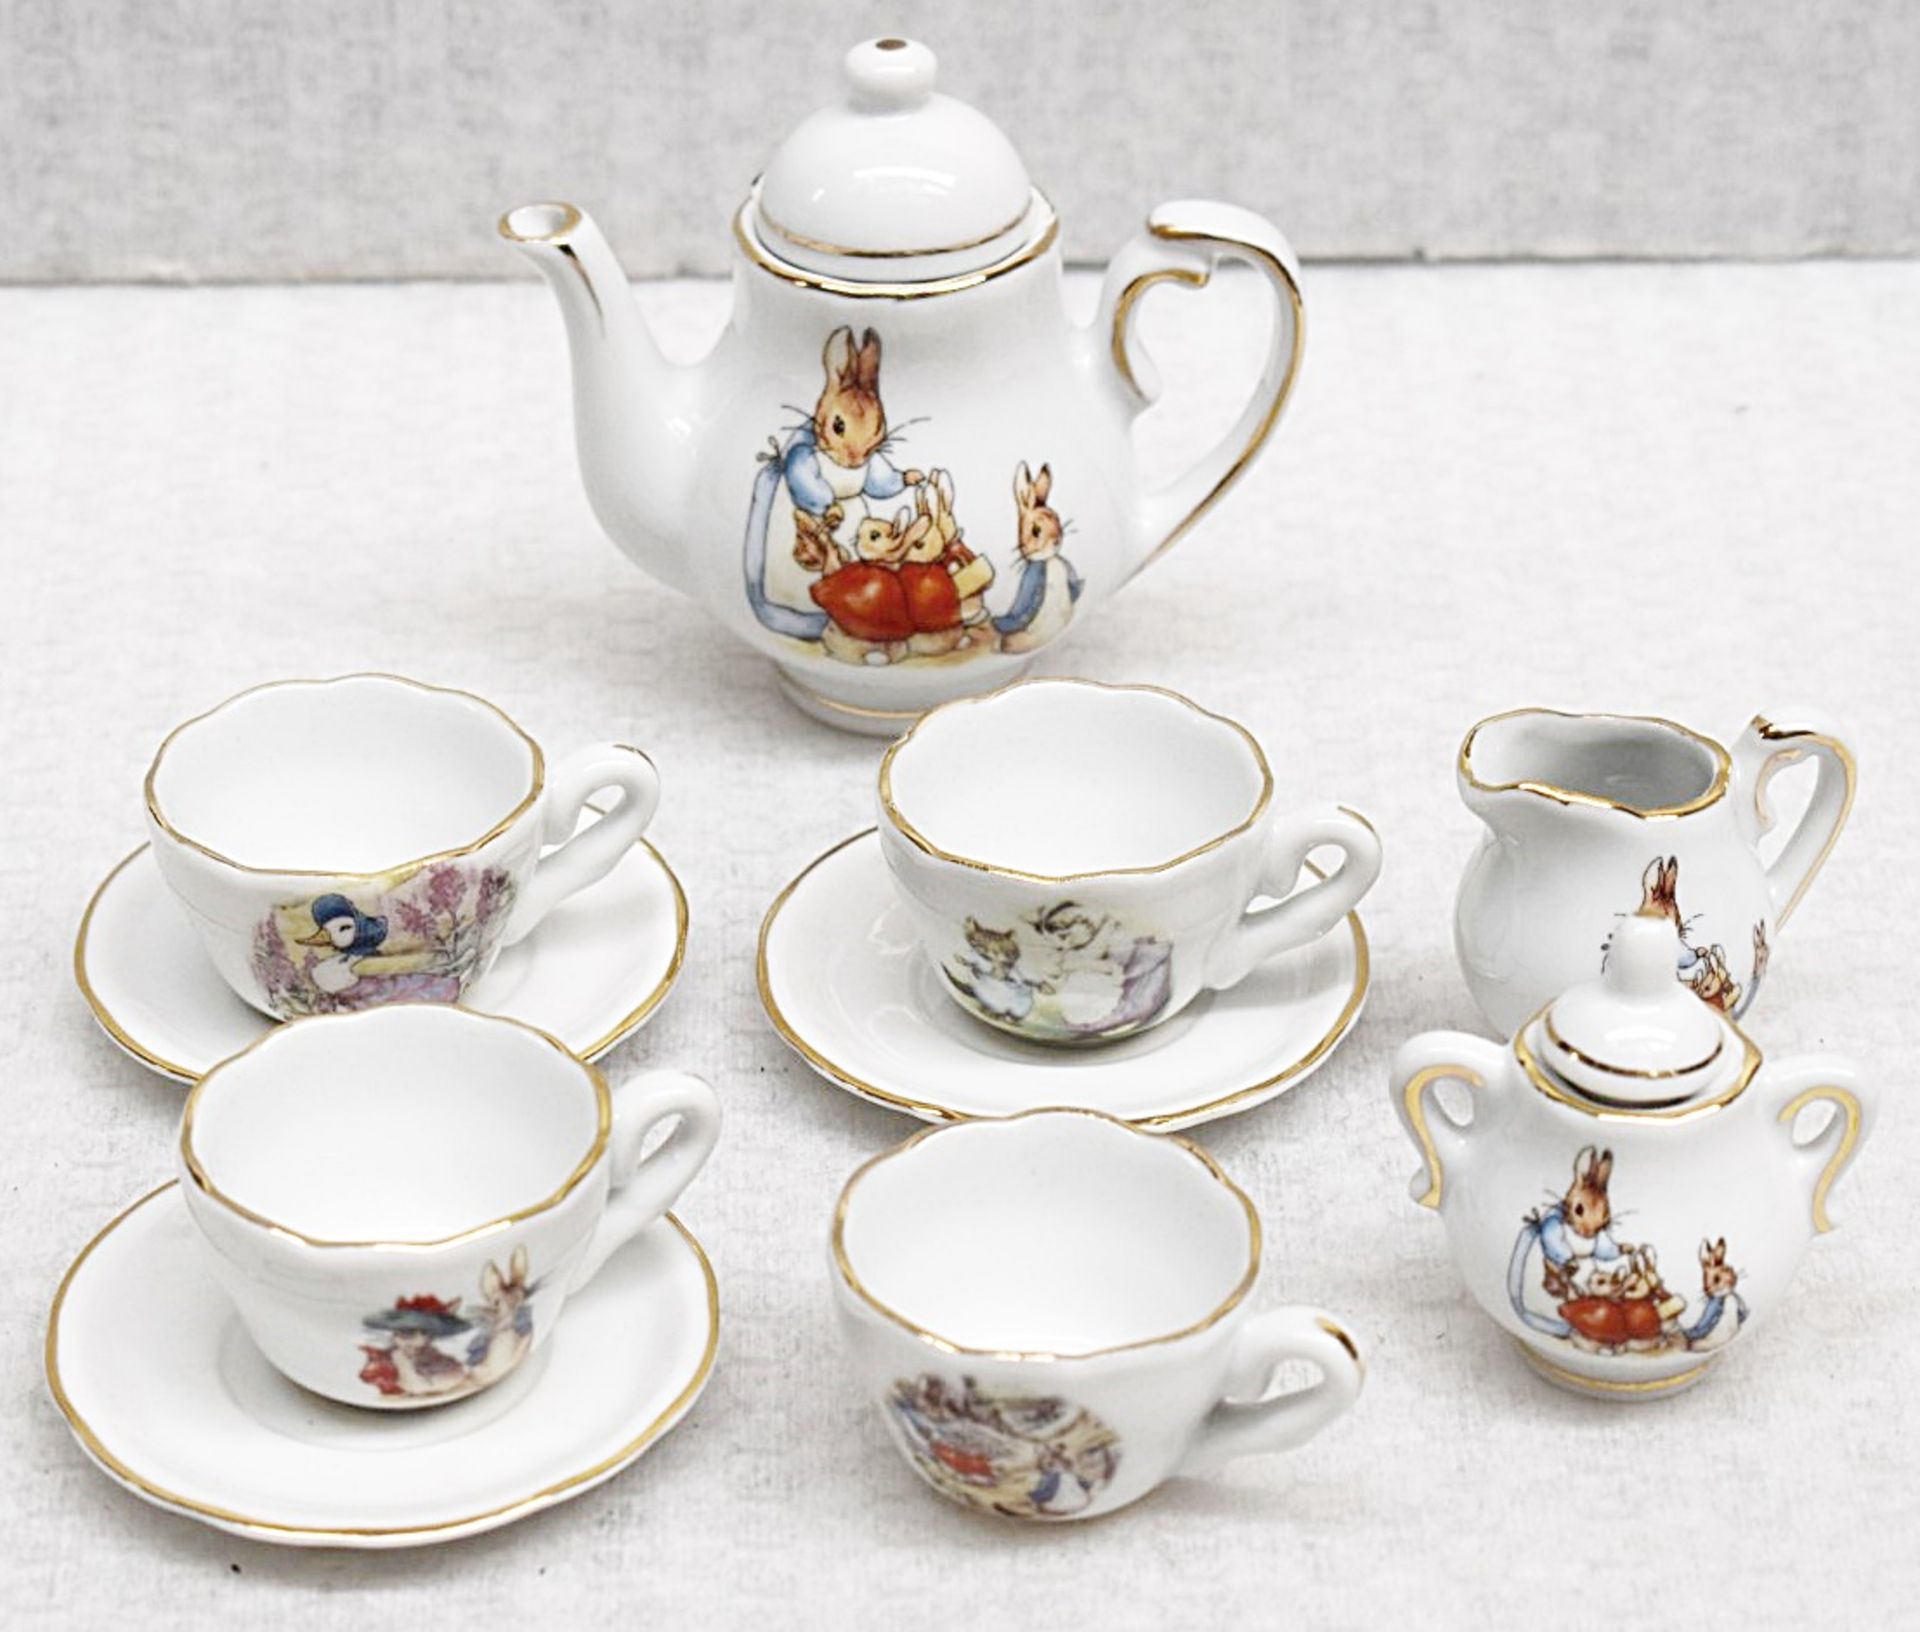 1 x Beatrix Potter Hand-gilded Porcelain Children's Tea Set In Case - Original Price £119.00 - - Image 2 of 6